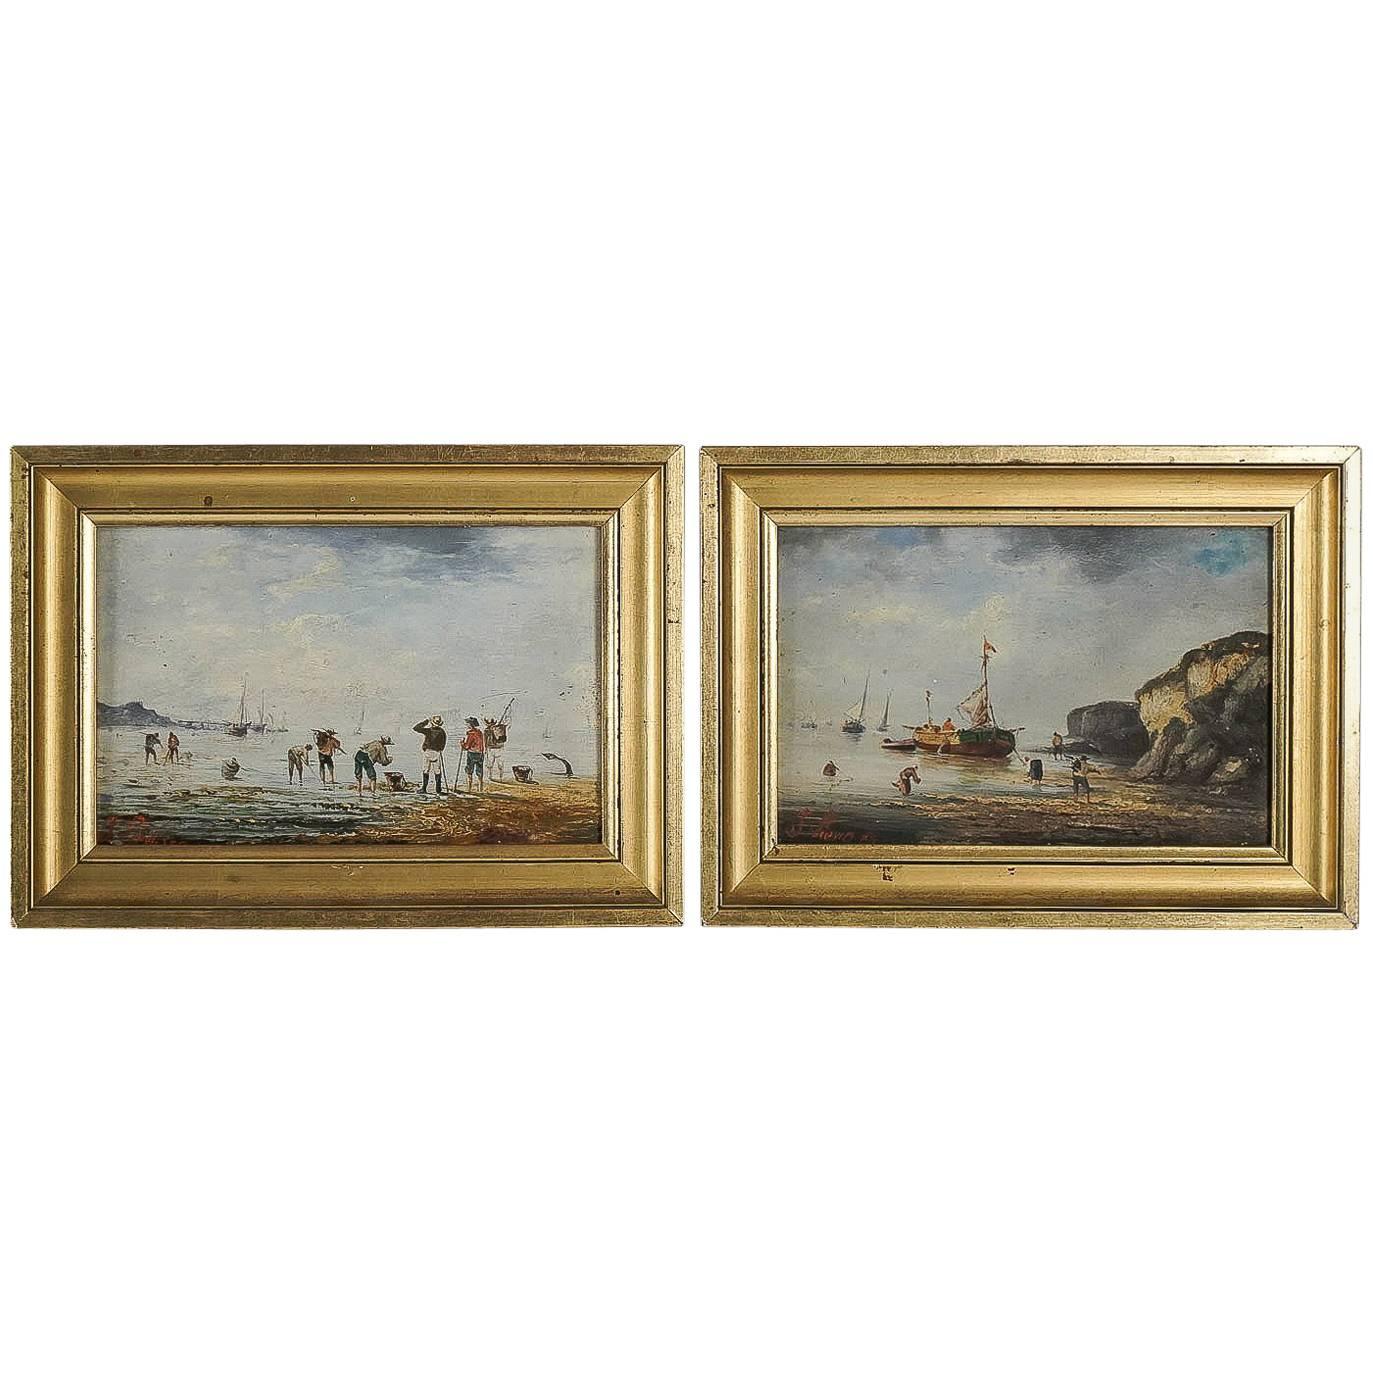 Eugène Galien-Laloue, Jacques Lievin Oil on Panel, Pair of Navy Scenes, 1885